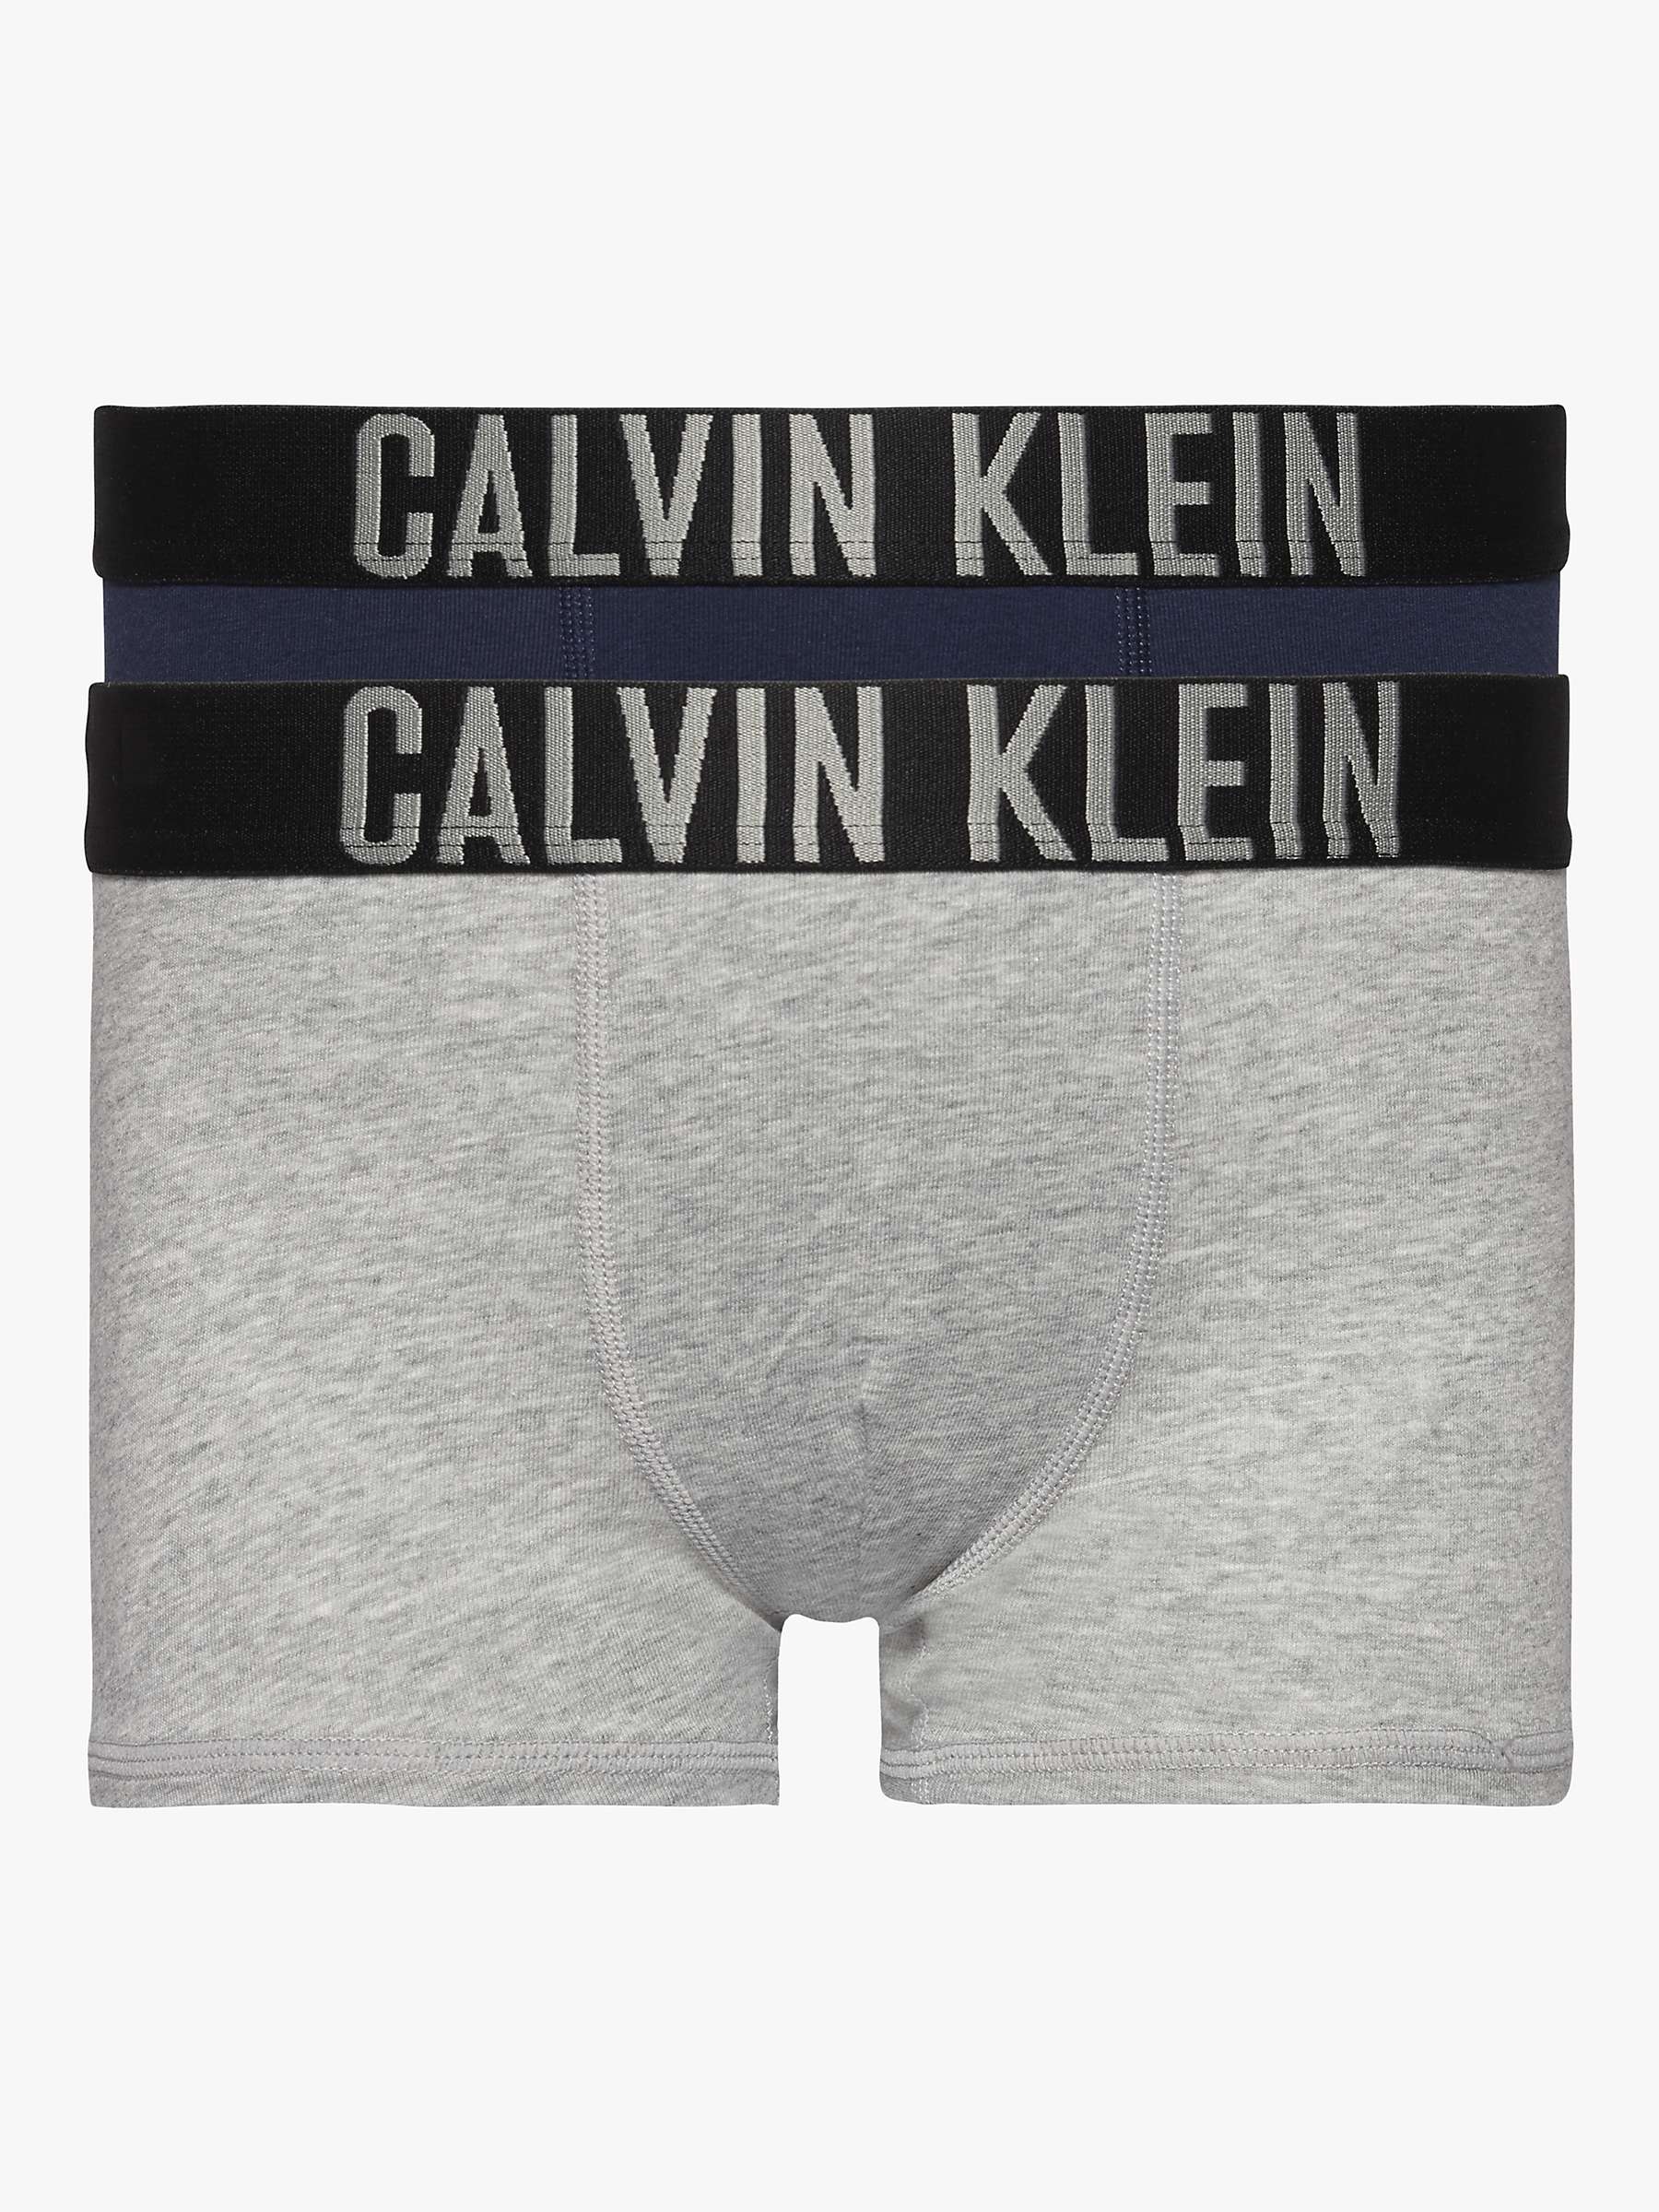 Buy Calvin Klein Kids' Trunks, Pack of 2 Online at johnlewis.com